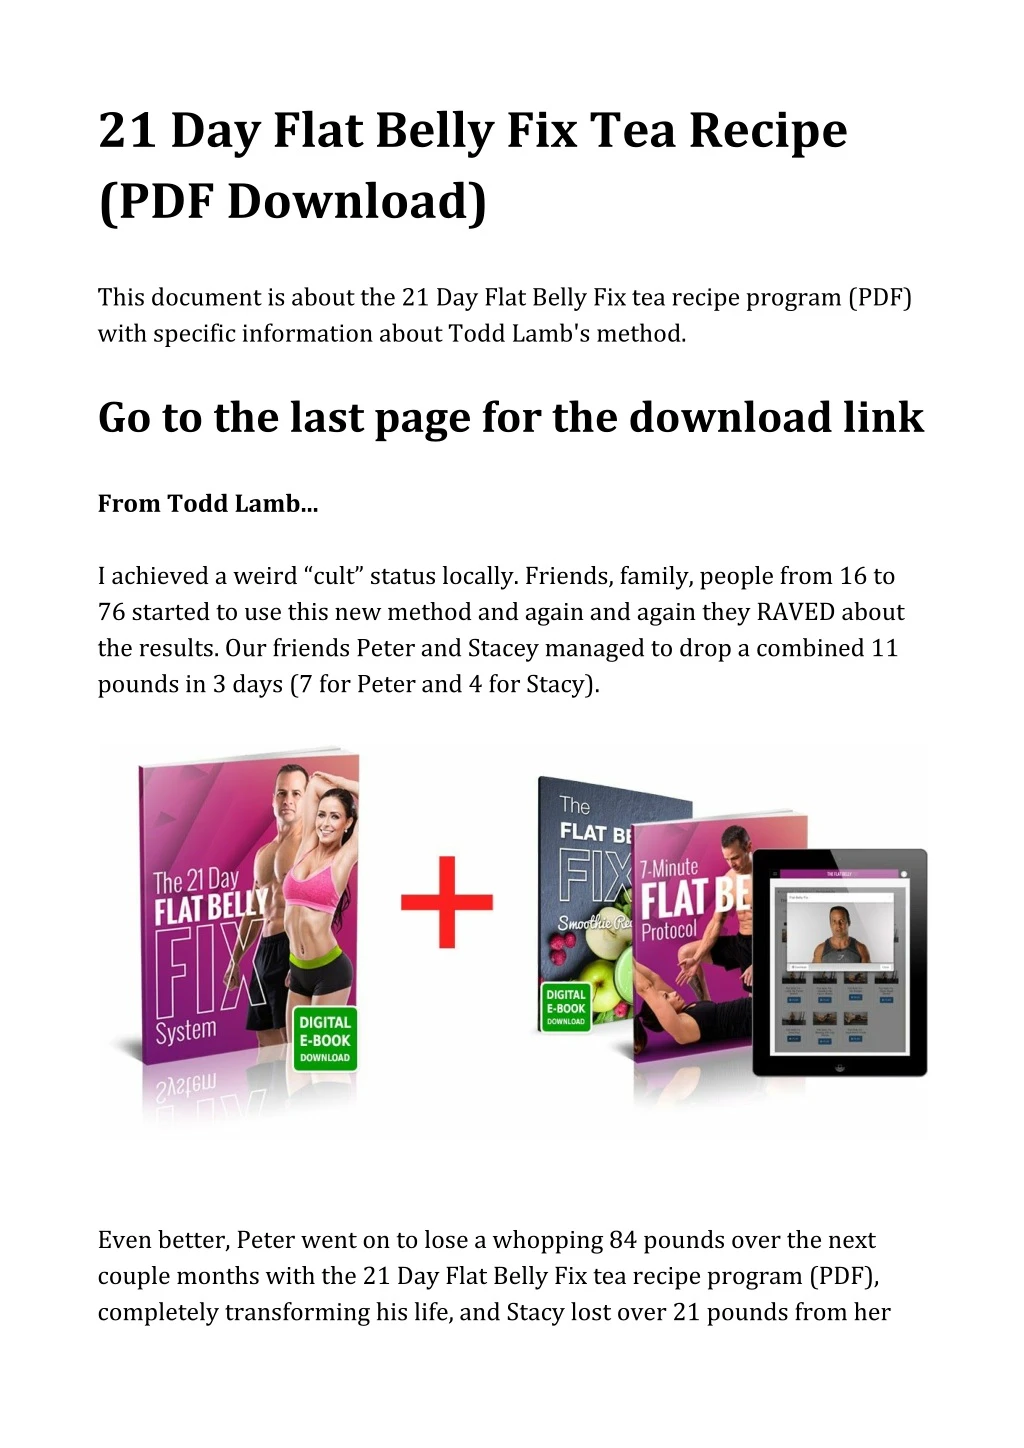 21 day flat belly fix tea recipe pdf download